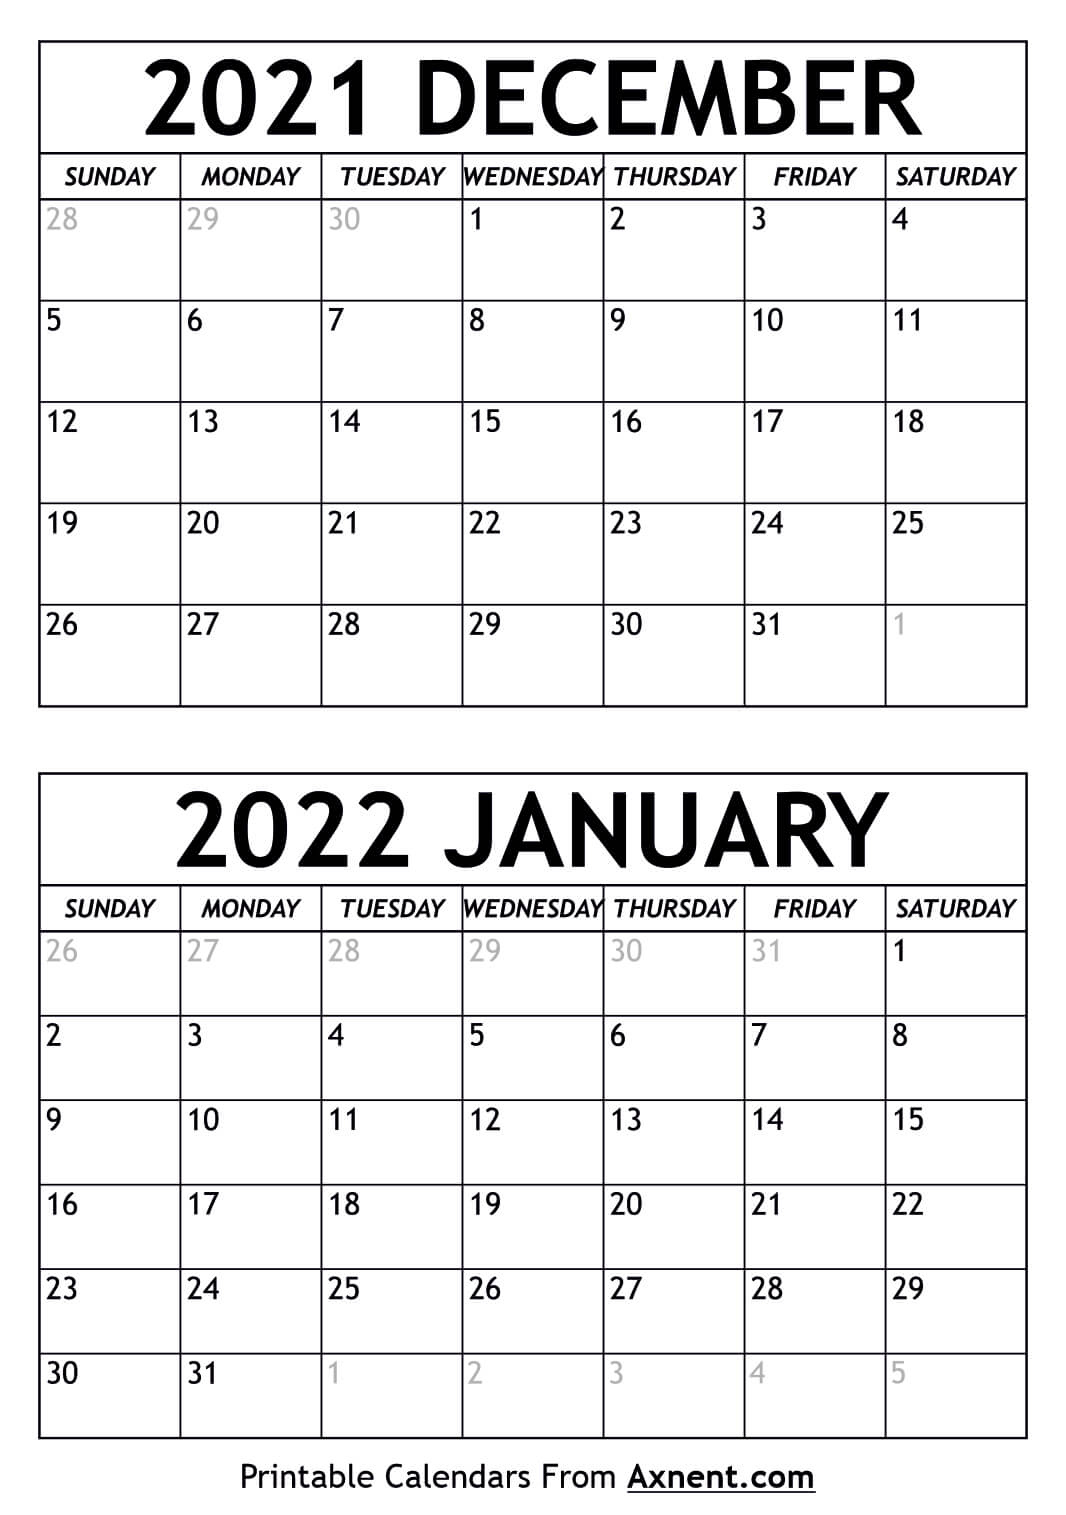 December 2021 January 2022 Calendar Template - Time Calendar December 2021 To January 2022